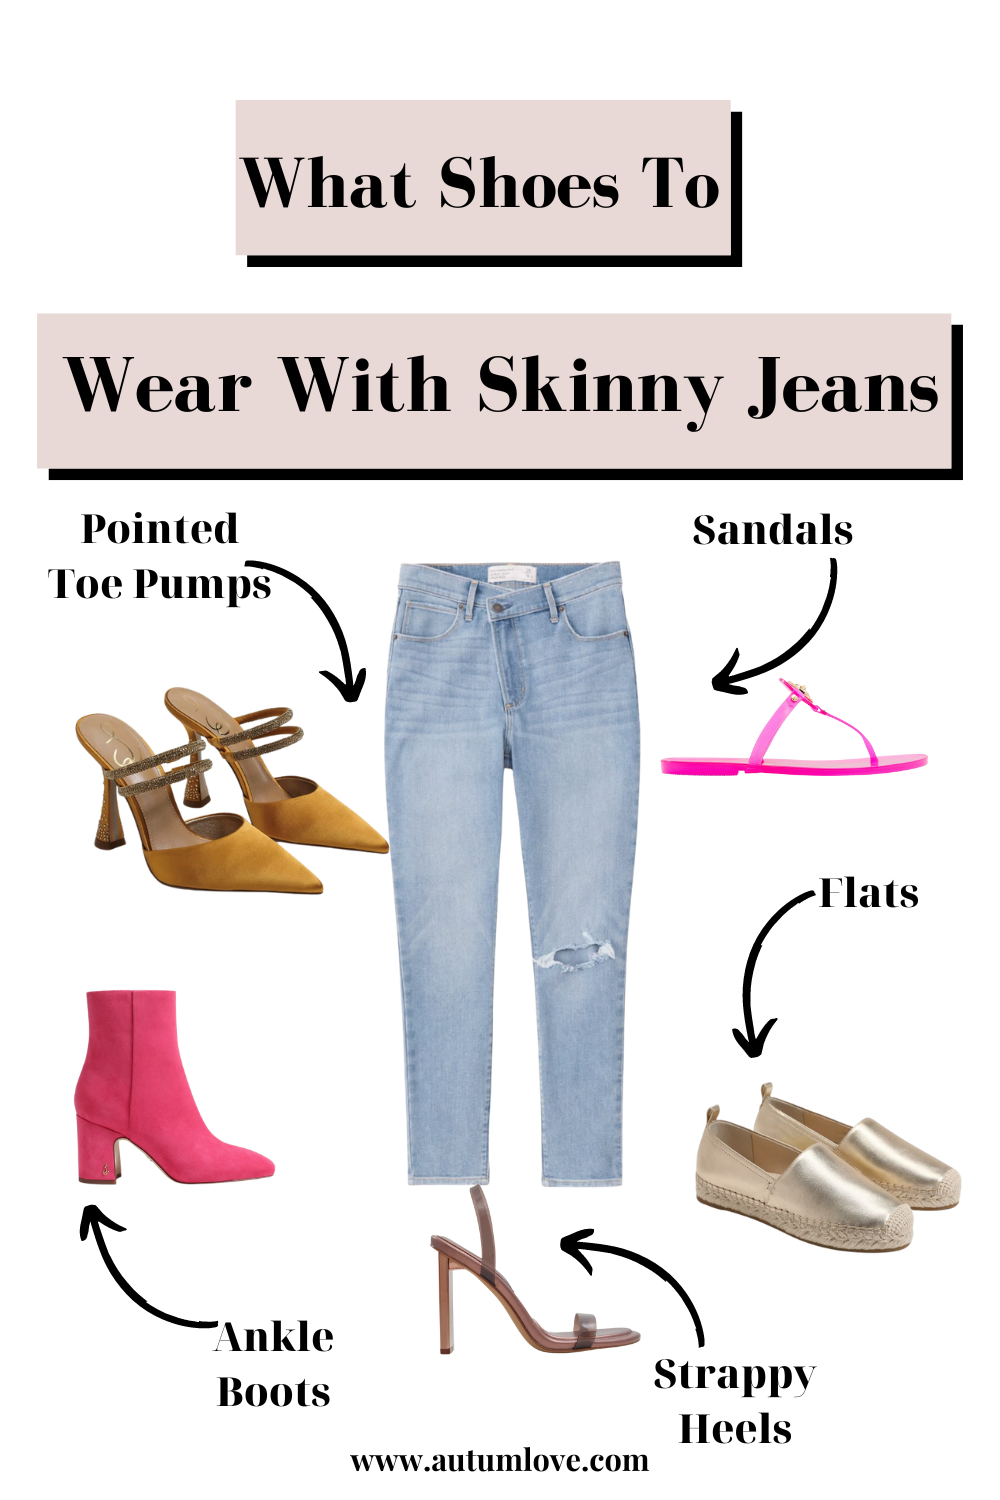 Can men wear high heels or girl skinny jeans? : r/AskGirls